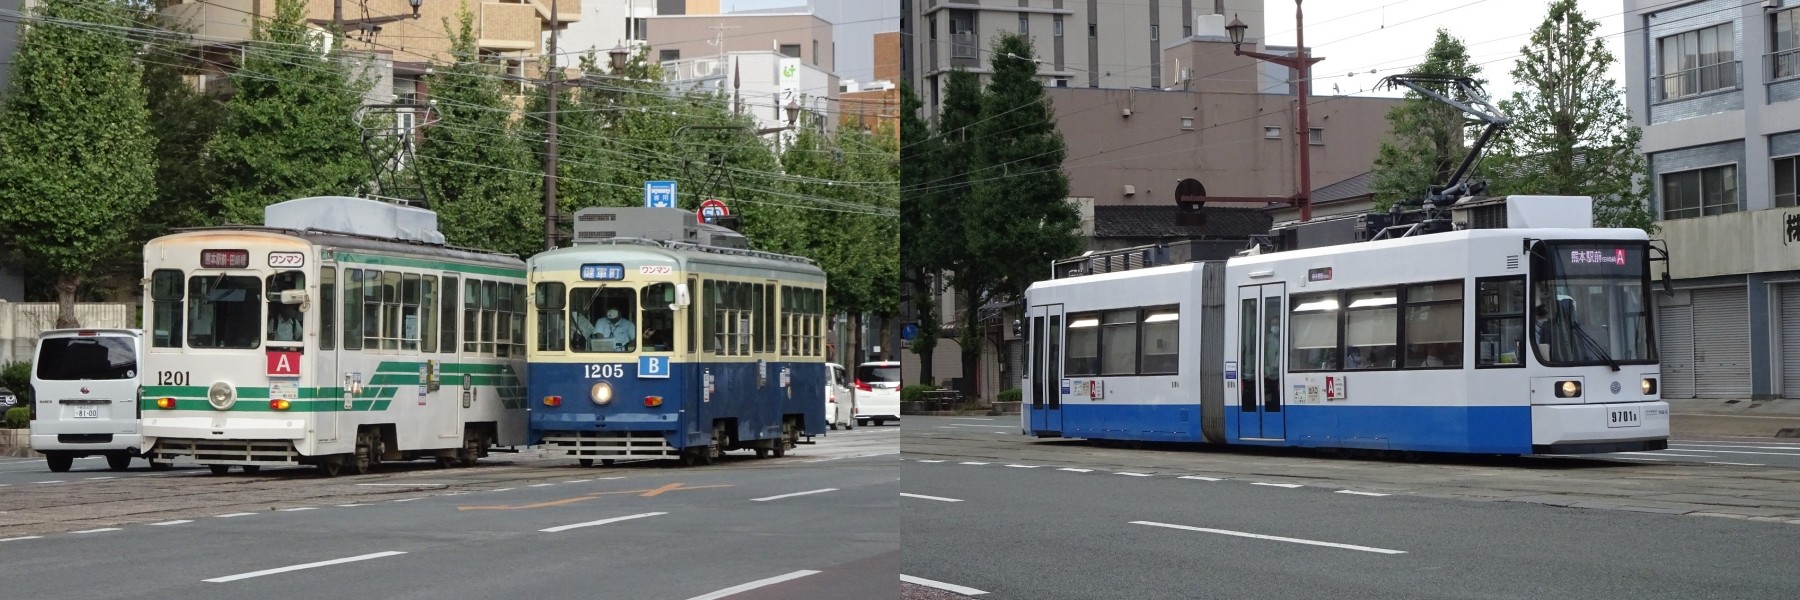 九州・熊本市内を走る路面電車・熊本市電